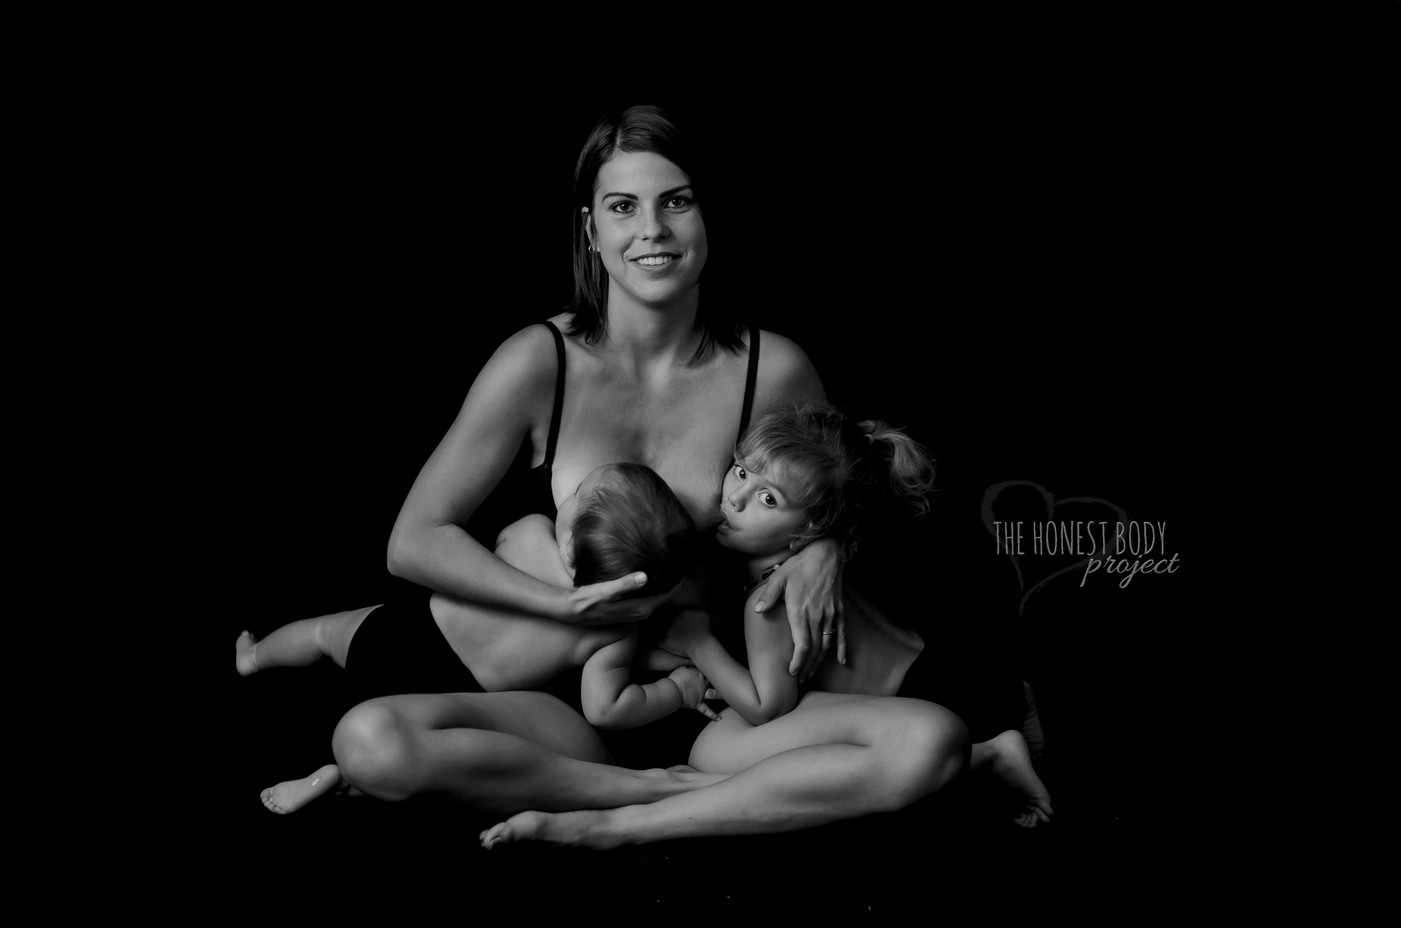 голая женщина с ребенком фото и видео фото 76